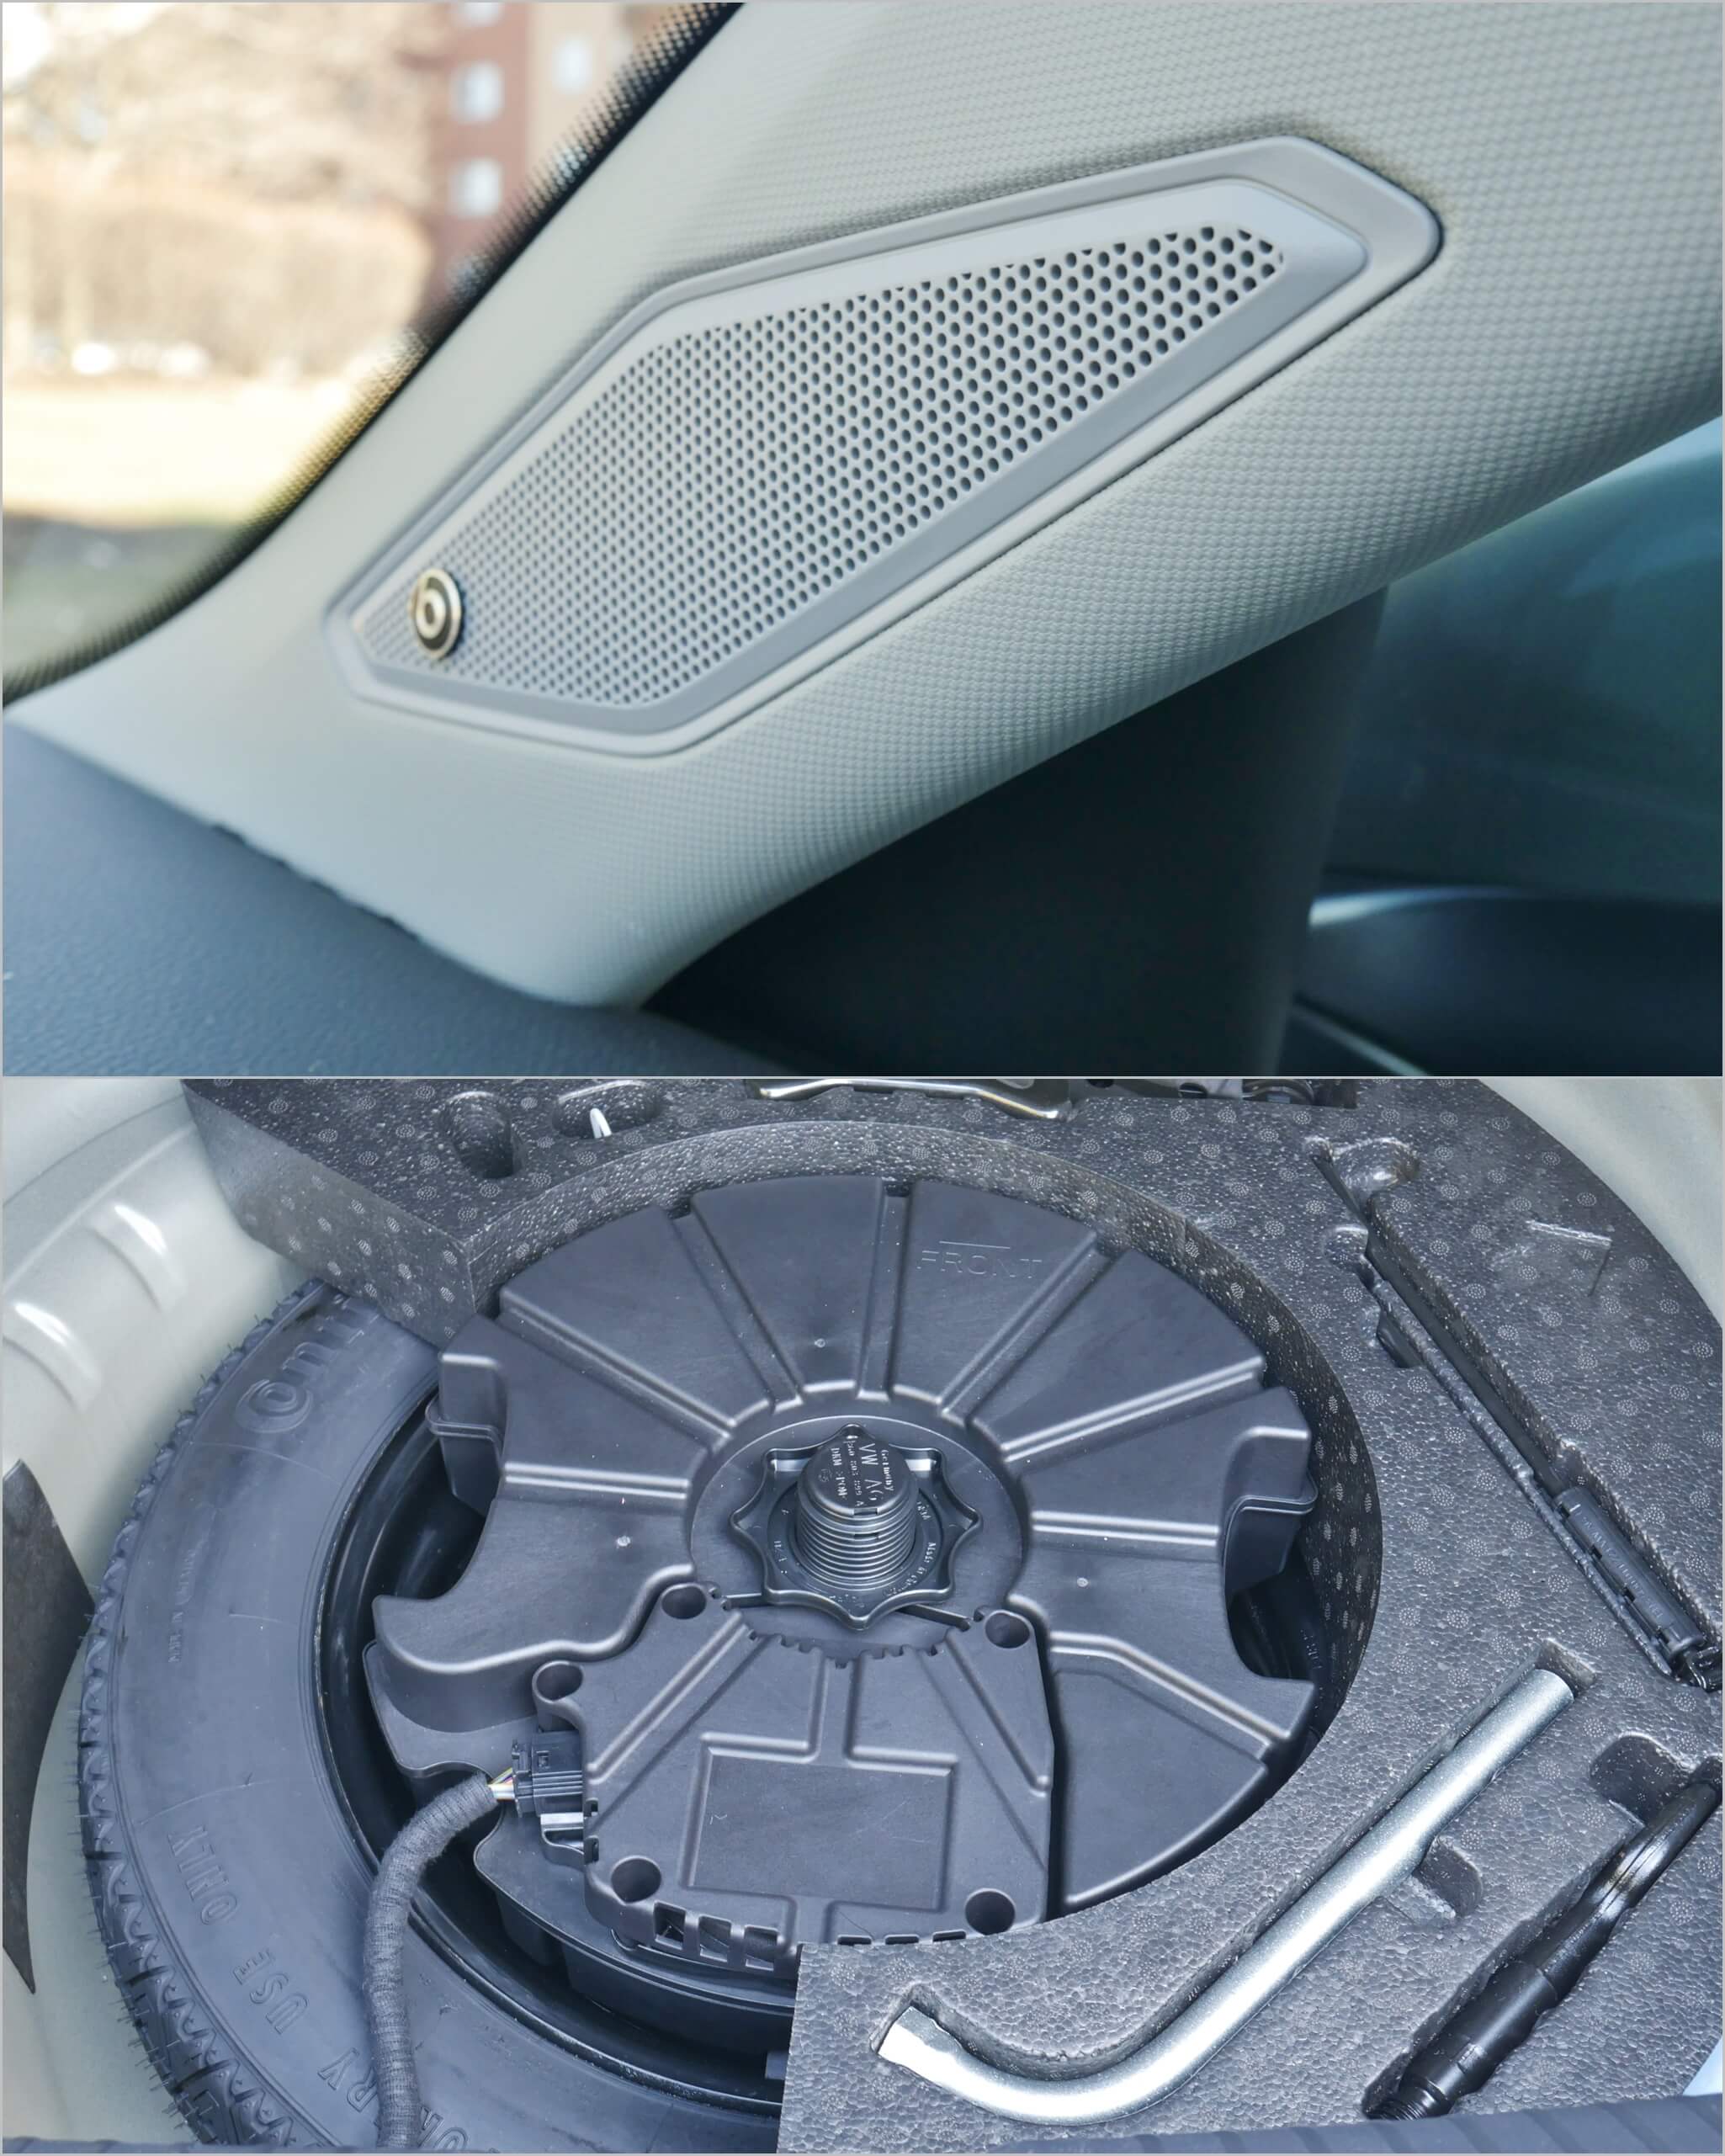 2019 Volkswagen Jetta SEL Premium: Part of BEAT Audio 400 W, 8-speaker + trunk donut mounted subwoofer sound system